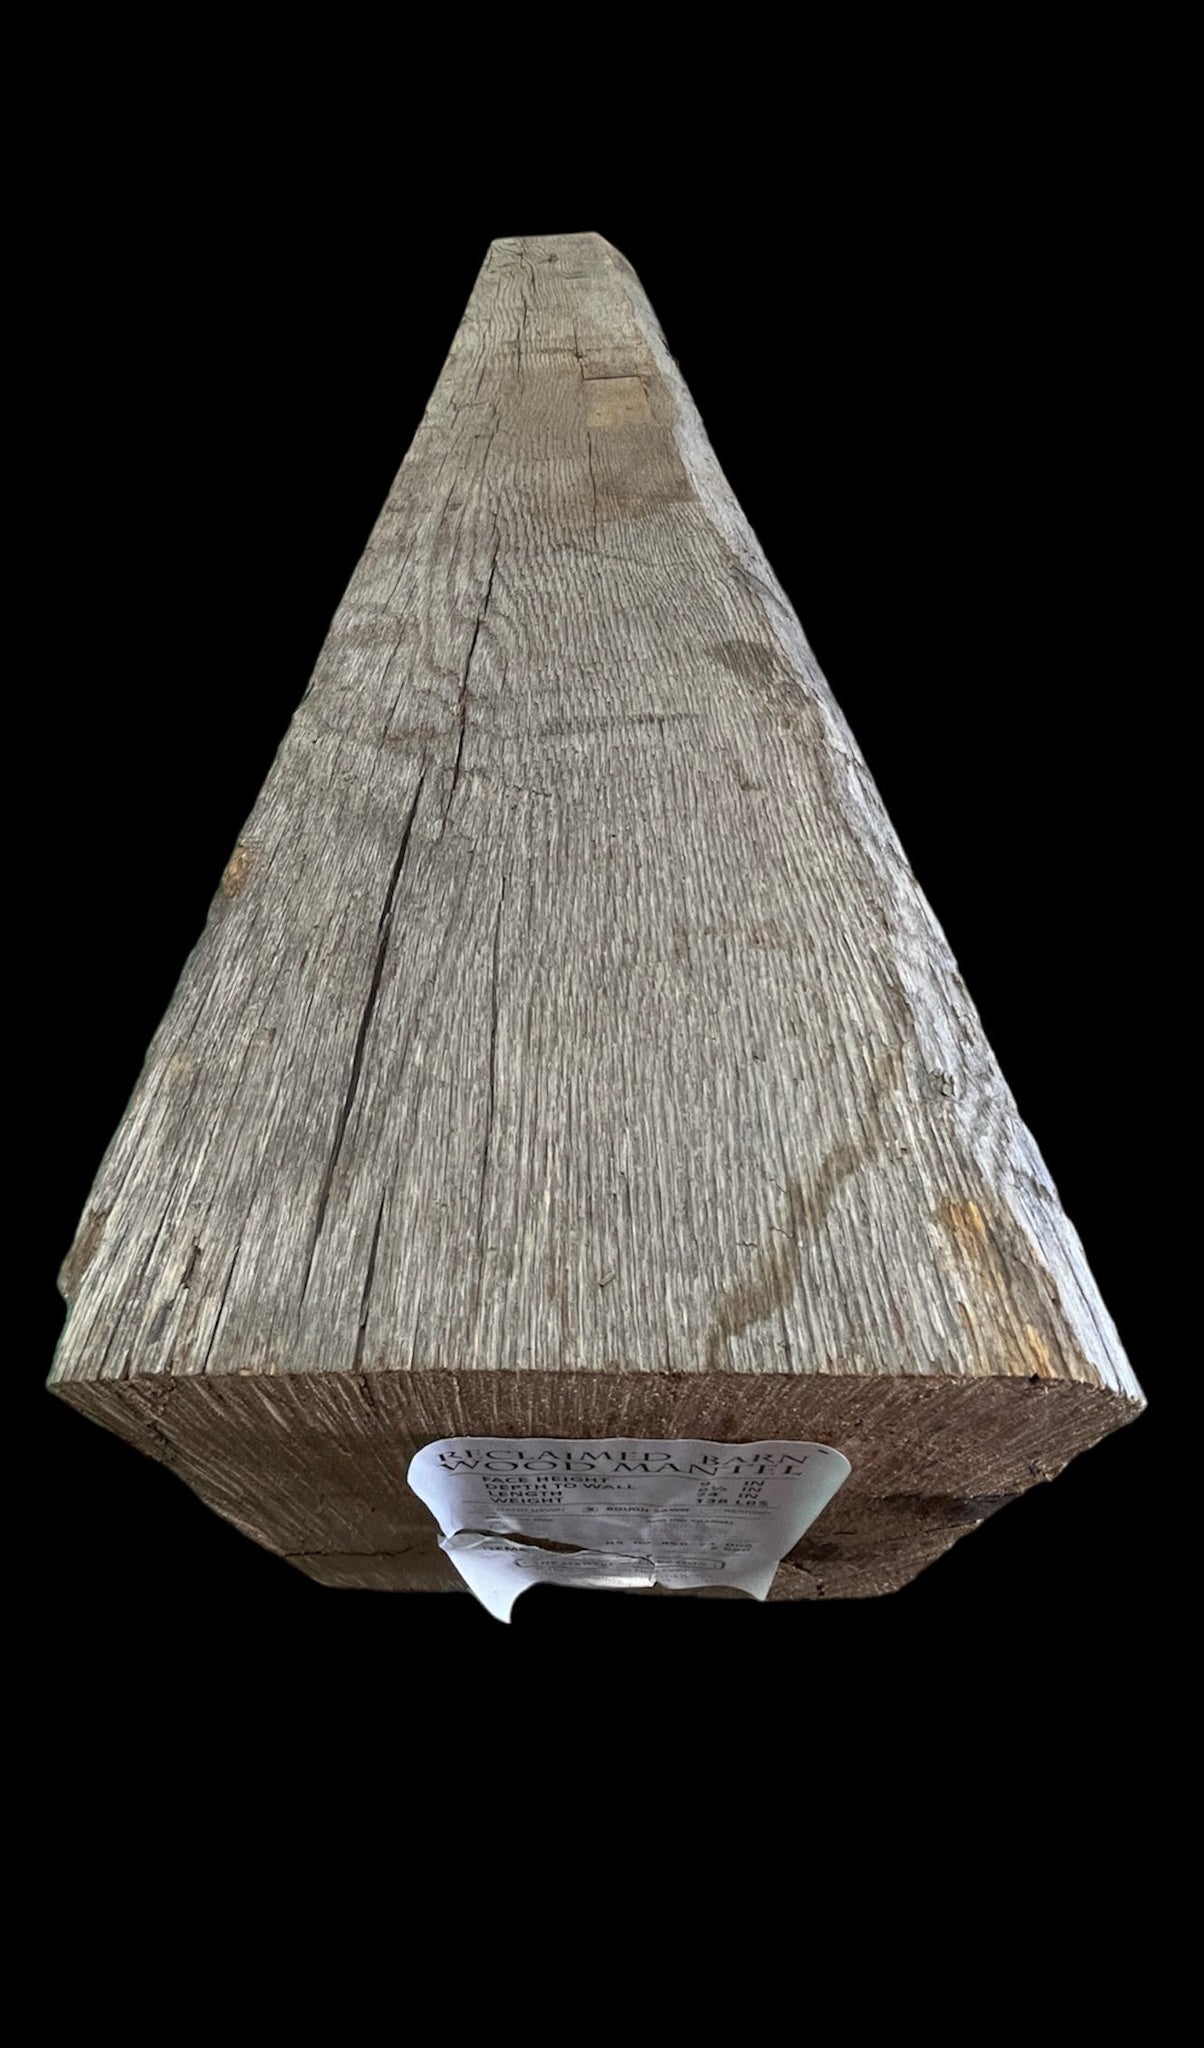 6 Foot Solid Rough Sawn Reclaimed Barn Wood Mantel 